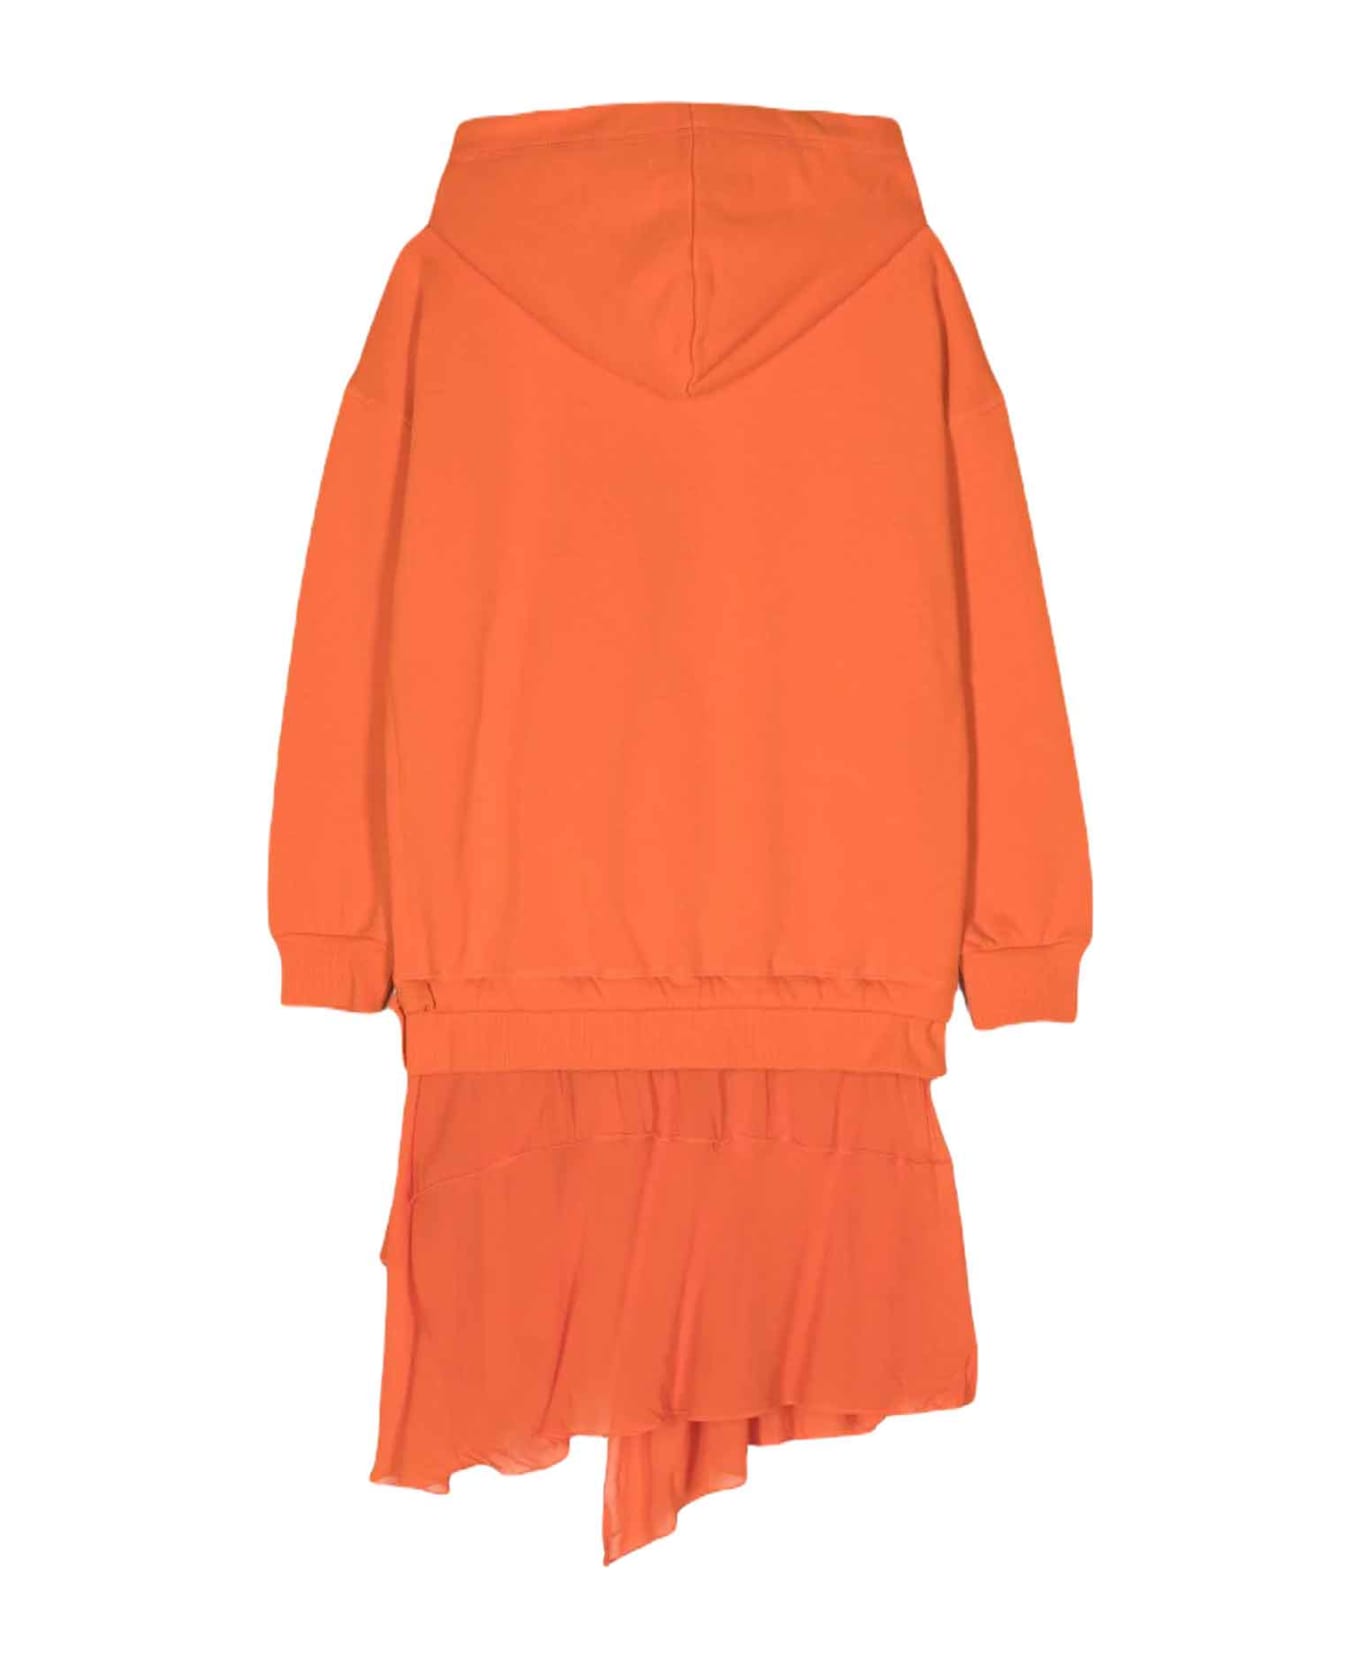 Diesel Orange Dress Girl - Arancione